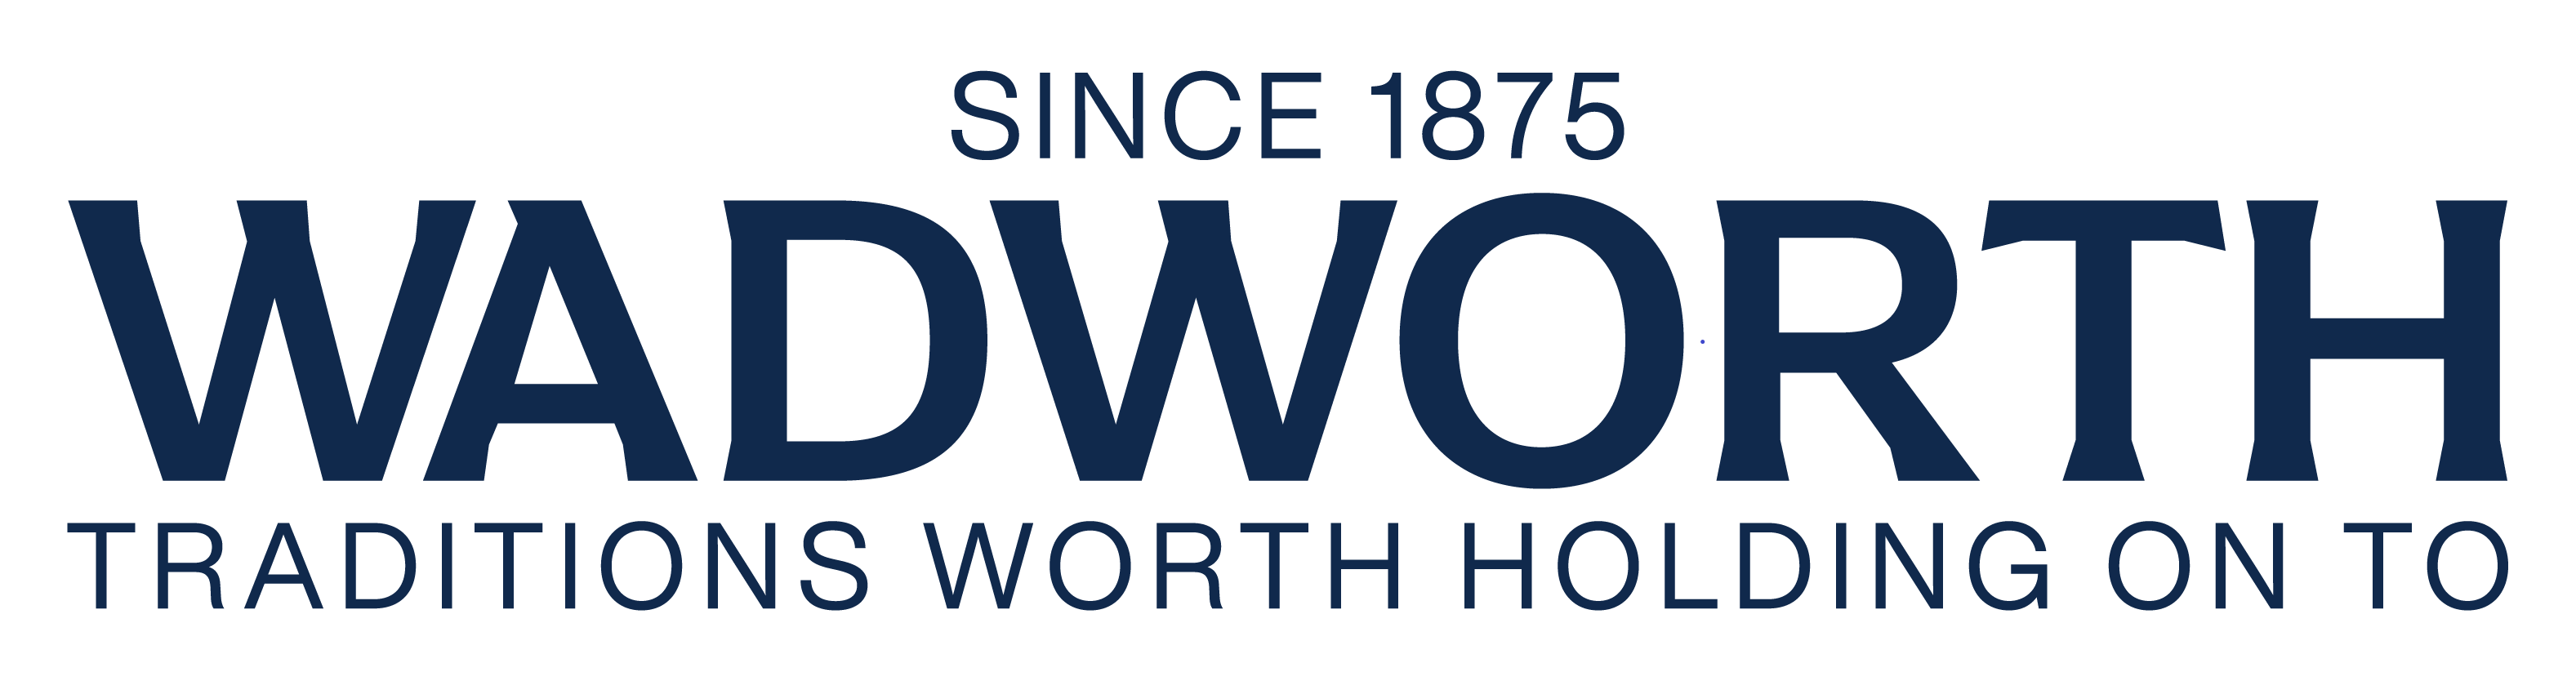 Wadworth & Co Ltd - A Ordinary Shares